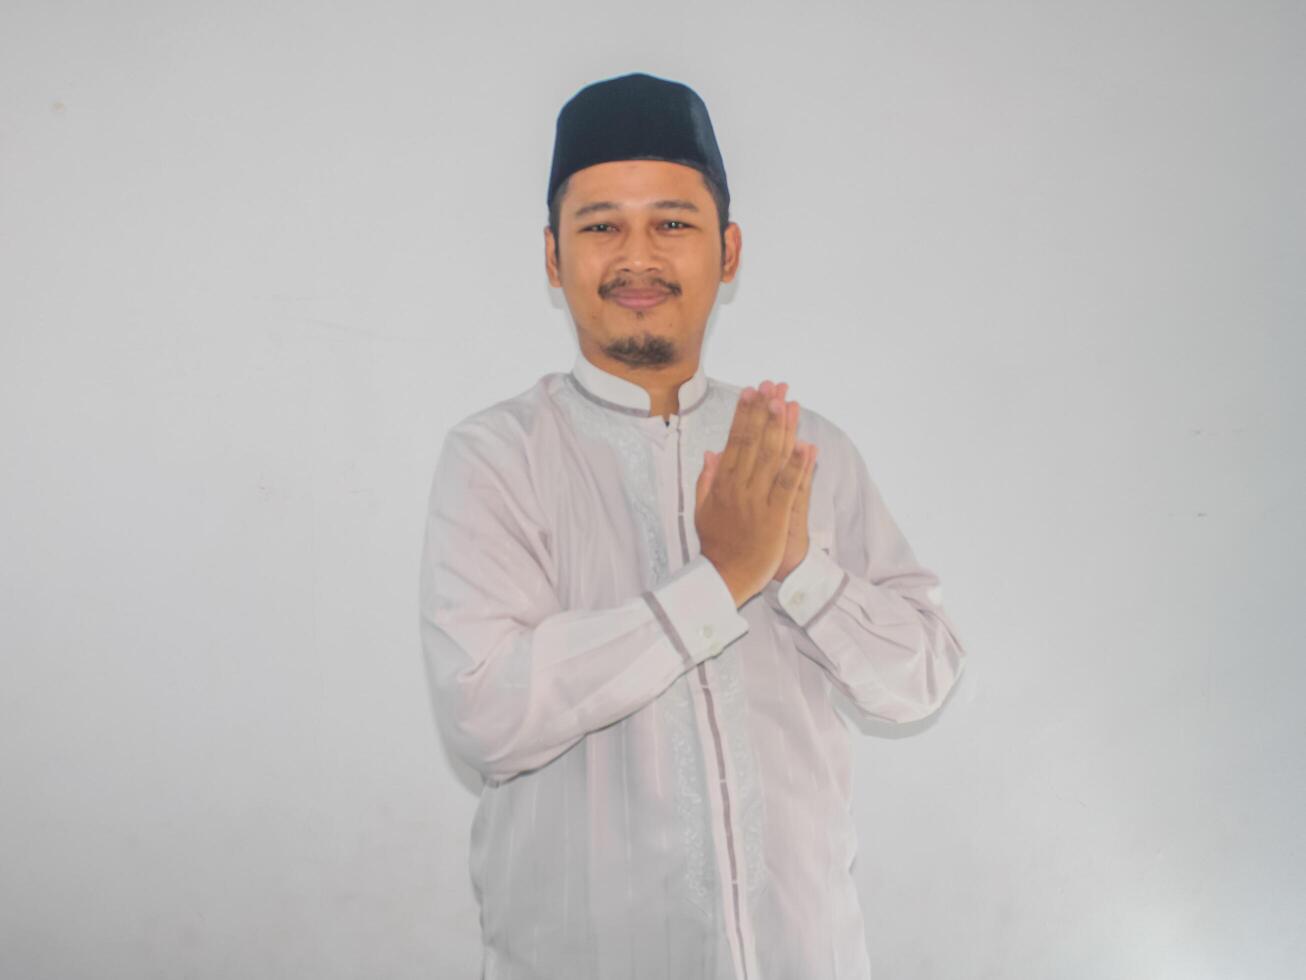 musulmán asiático hombre sonriente a dar saludo durante Ramadán celebracion foto